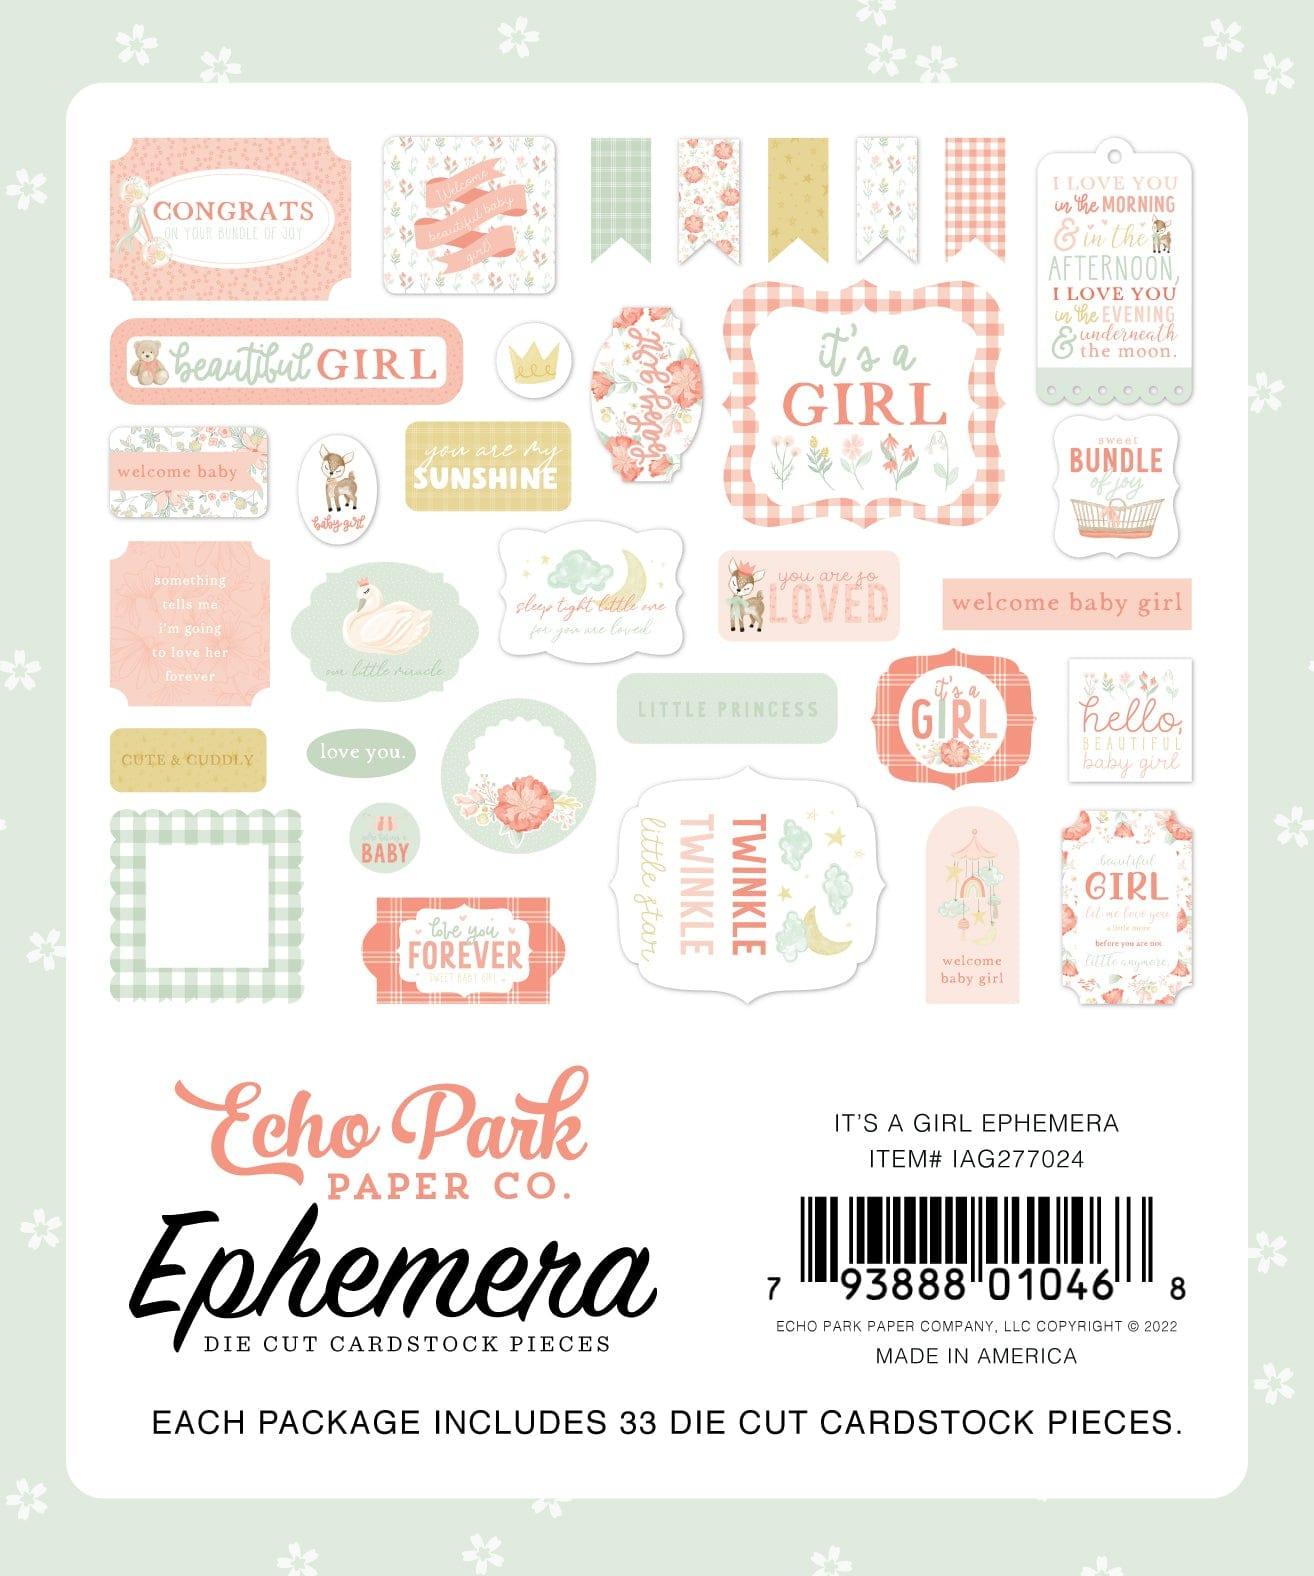 It's A Girl Collection 5 x 5 Scrapbook Ephemera Die Cuts by Echo Park Paper - Scrapbook Supply Companies